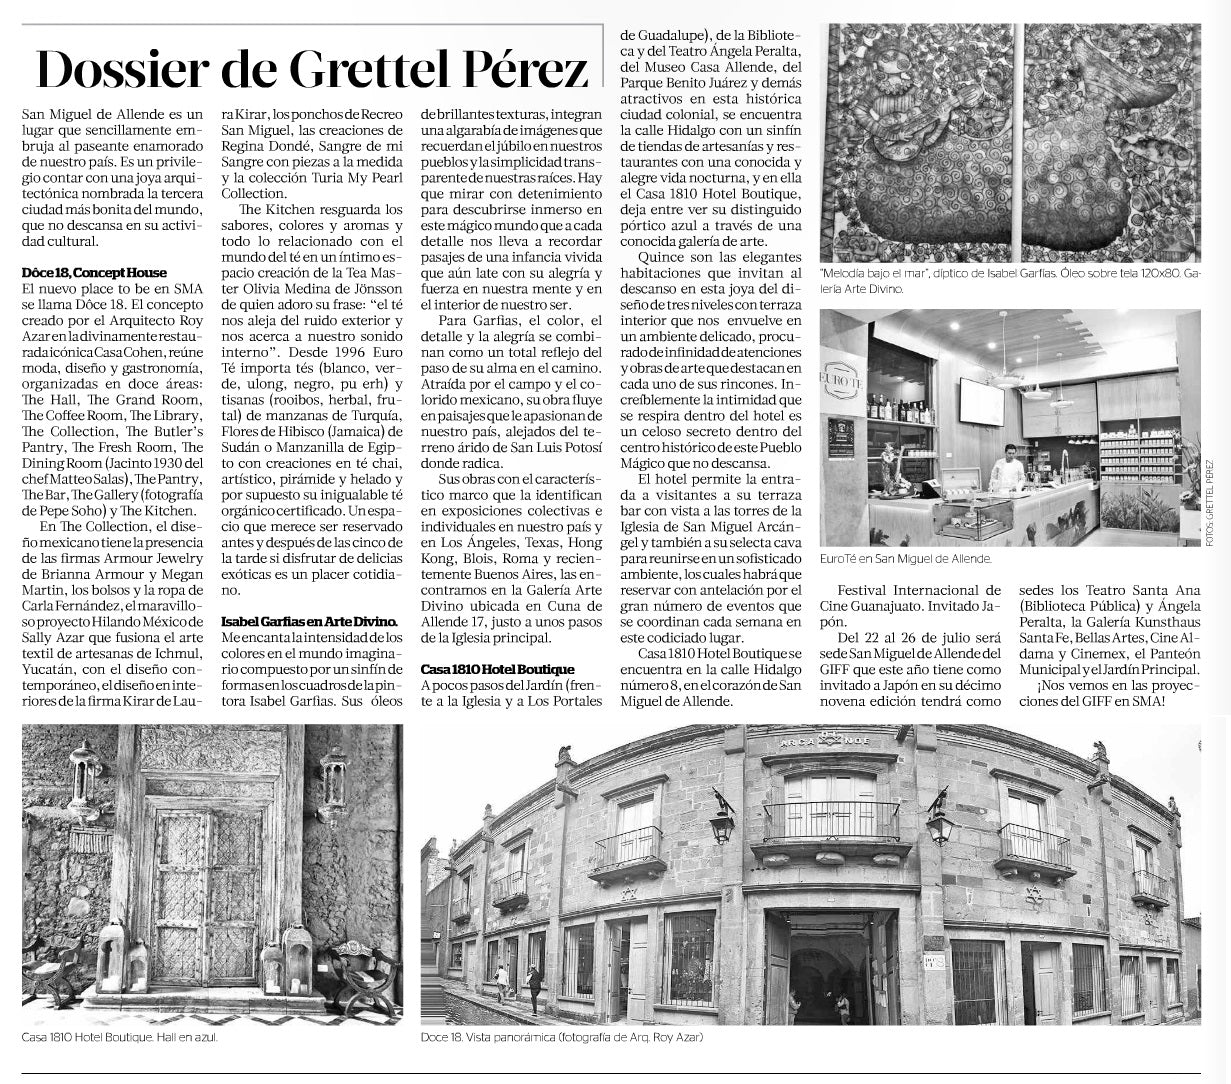 Dossier de Grettel Pérez